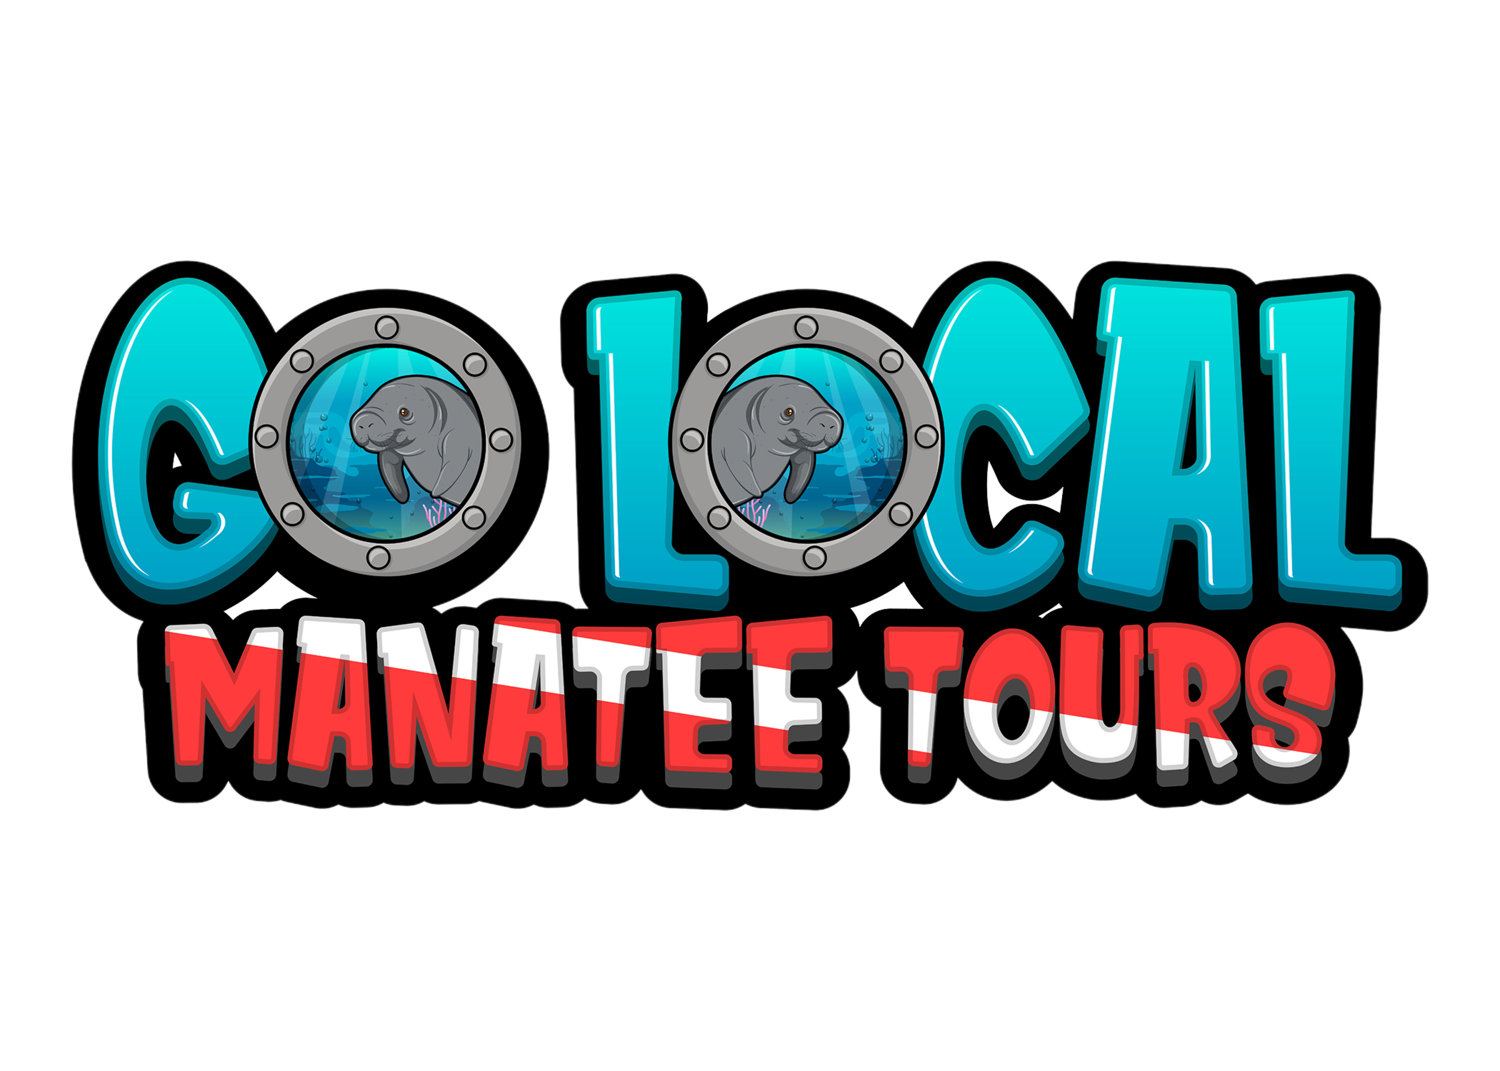 Go Local Manatee Tours